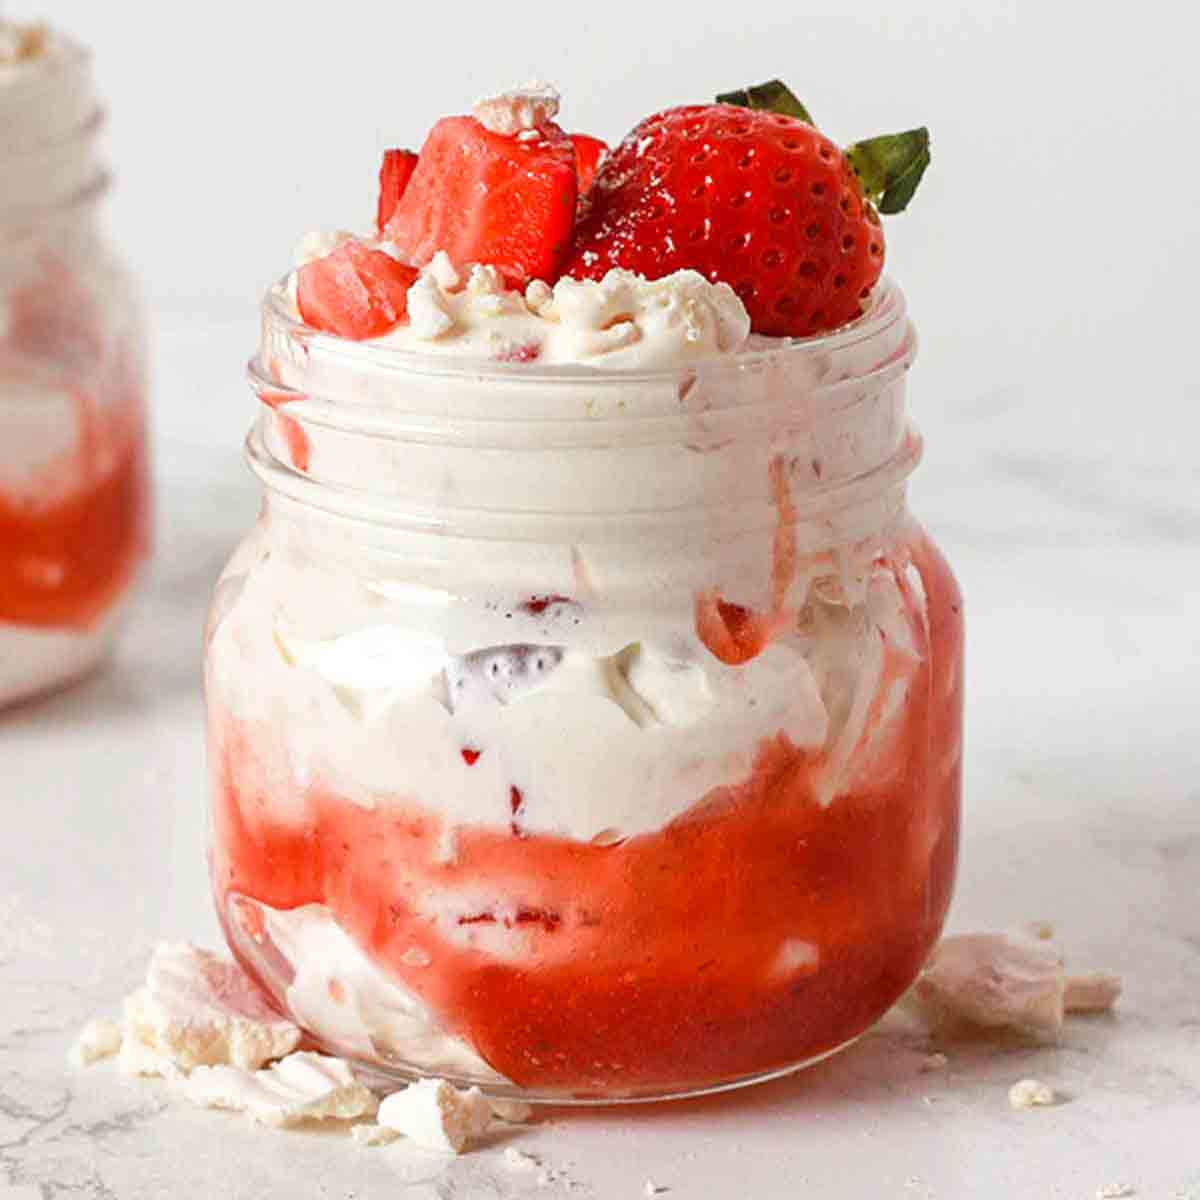 Vegan Eton Mess With Strawberries On Top